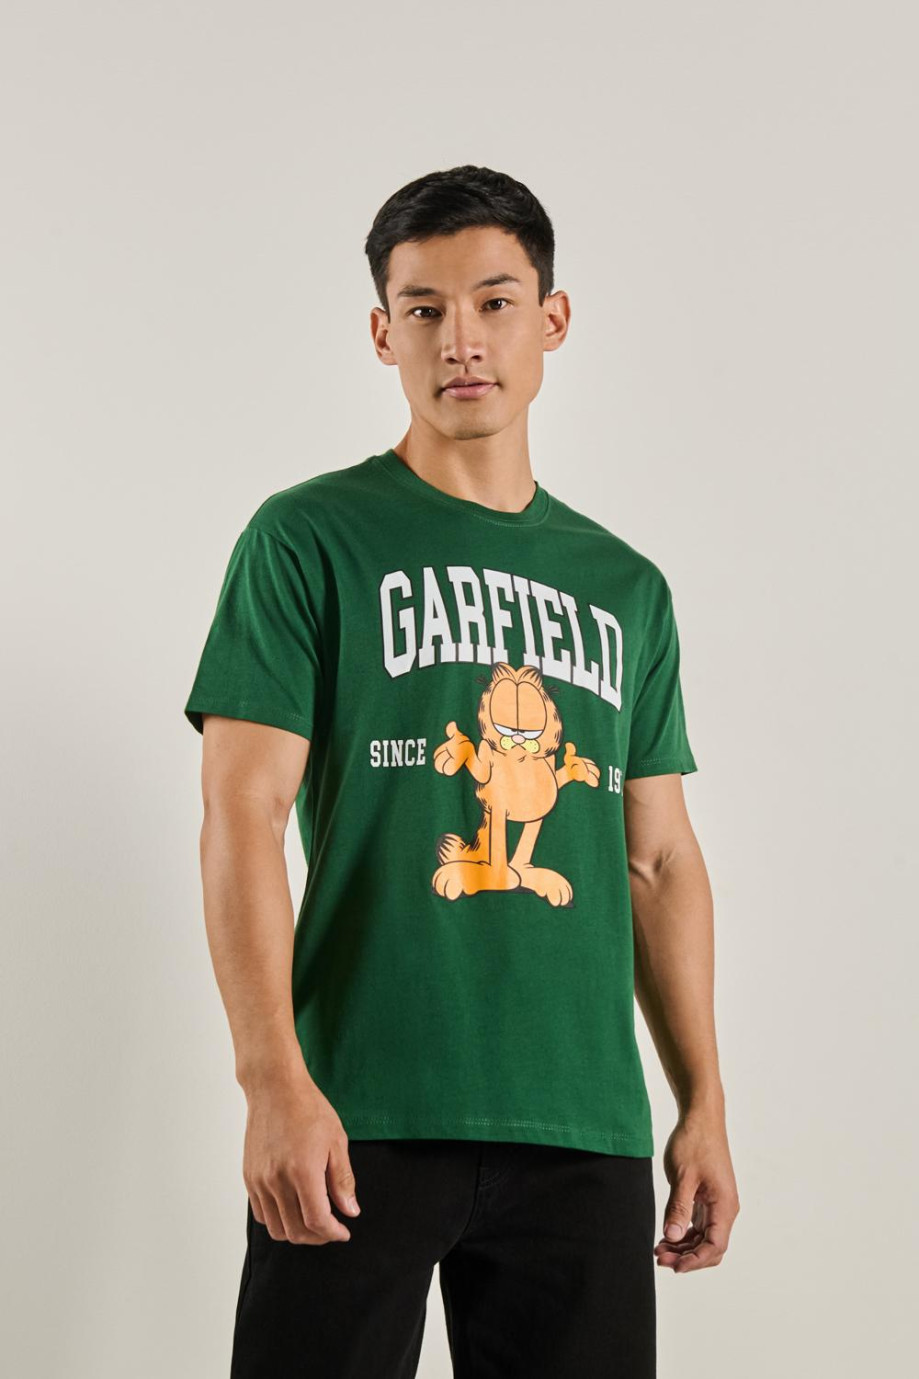 Camiseta manga corta con estampado de Garfield.